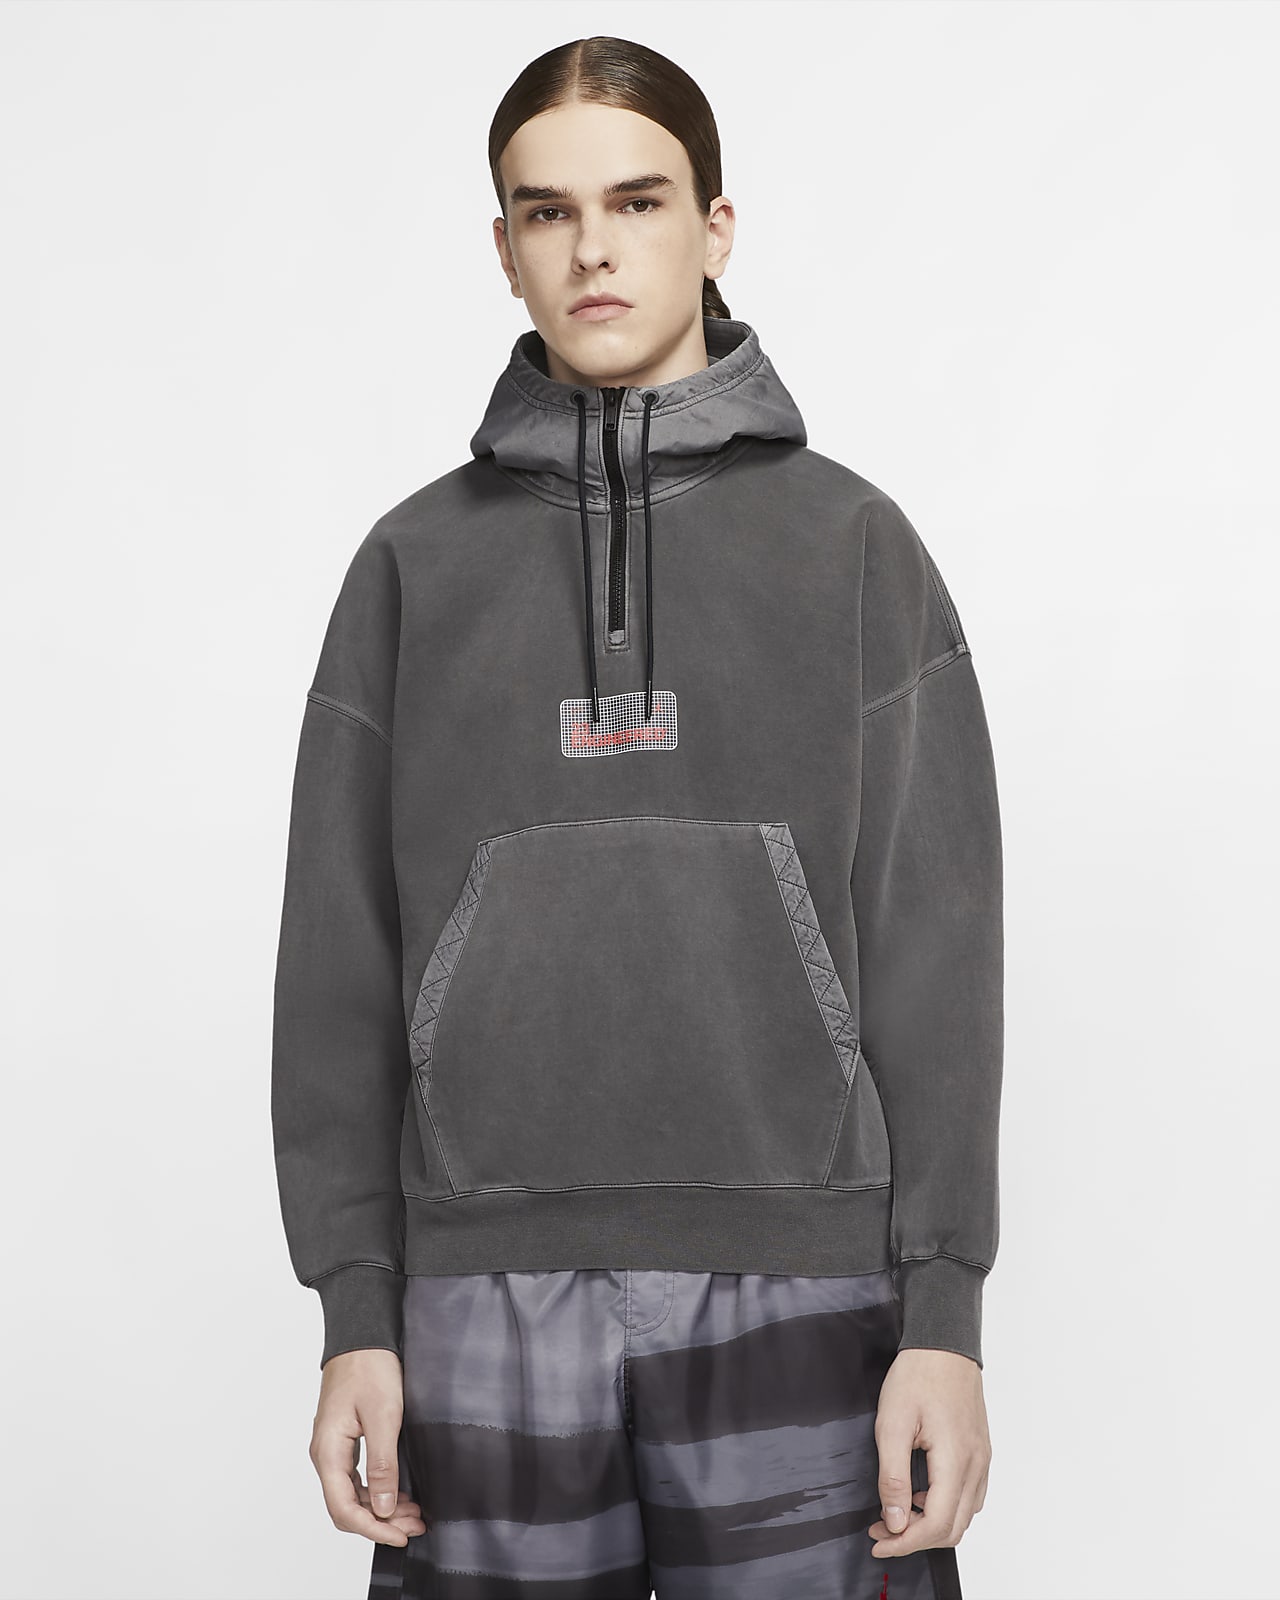 nike winter fleece hoodie with nylon panels in grey